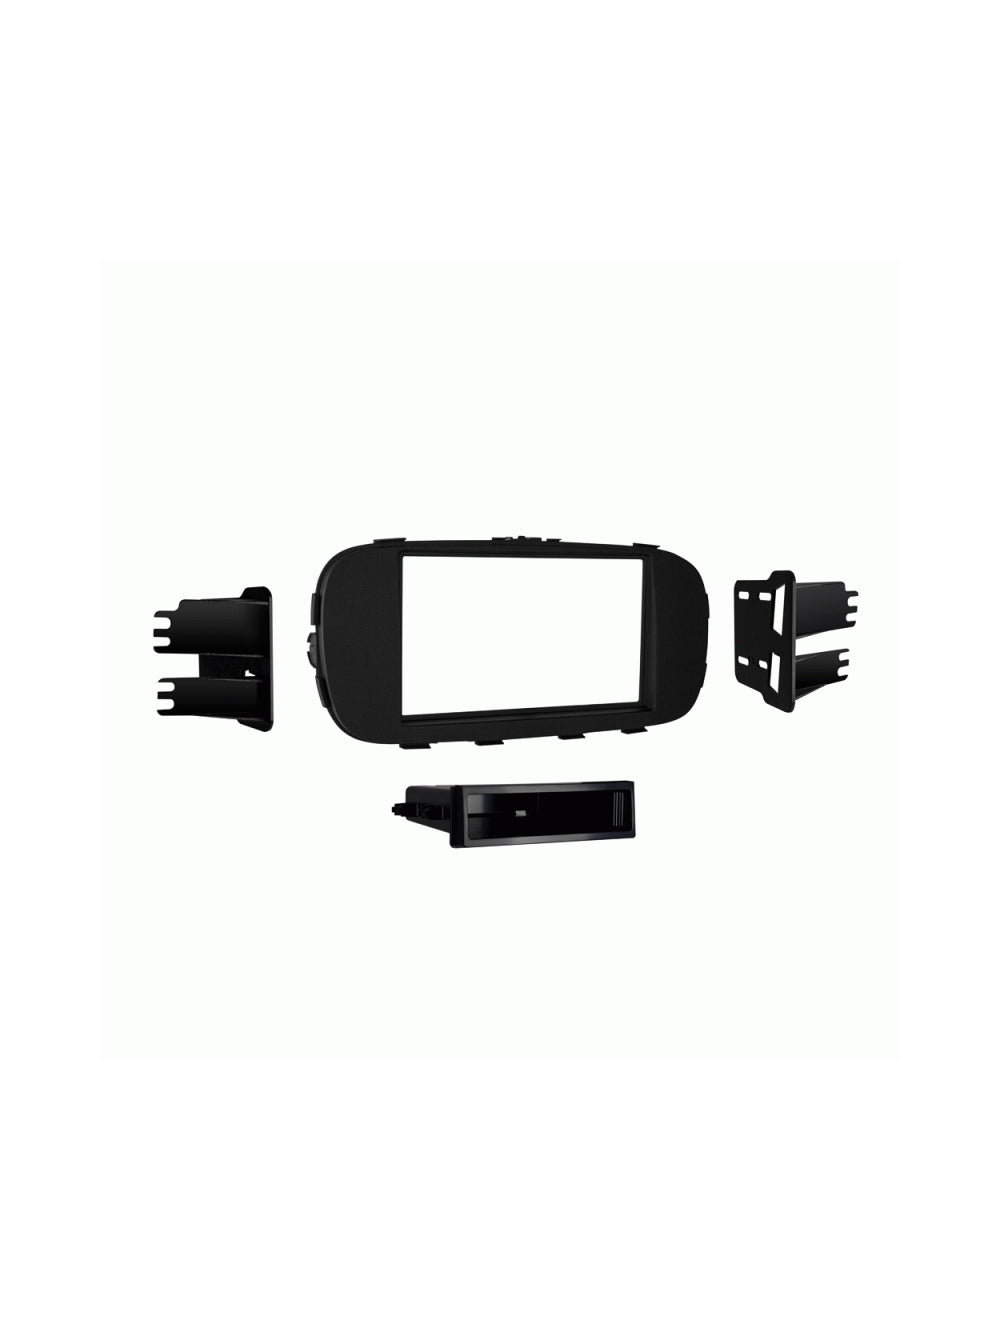 Metra 99-7360B Single DIN Dash Kit for Select 2014-Up Kia Soul Vehicles Black